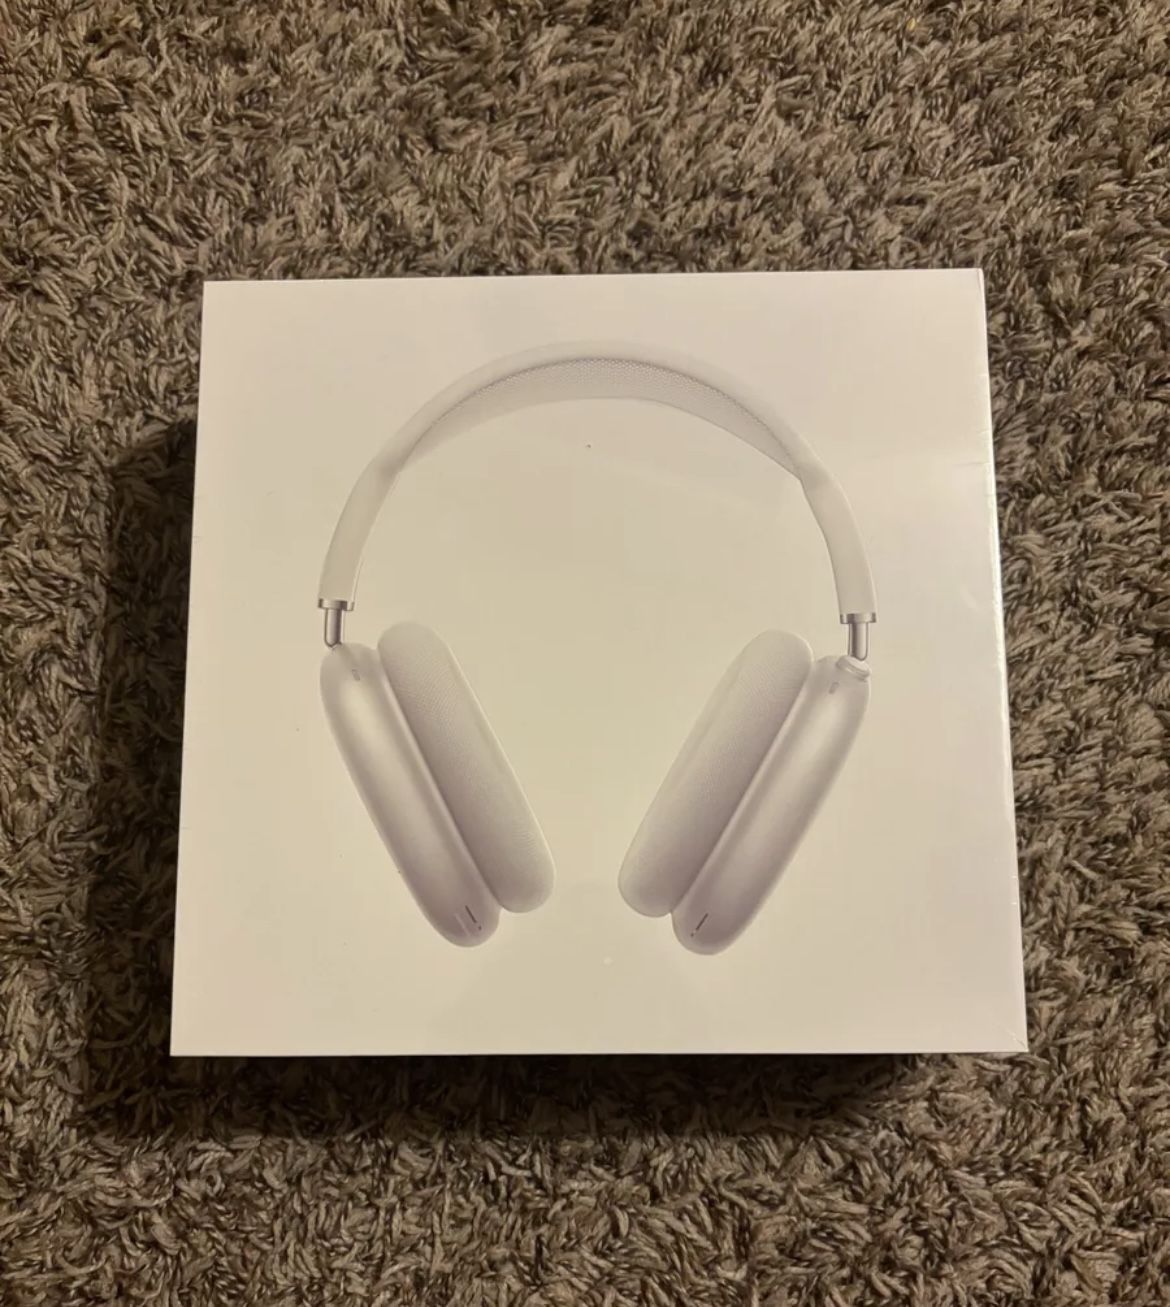 Apple AirPod Max Headphones -Silver Over Ear Headphones Earbuds